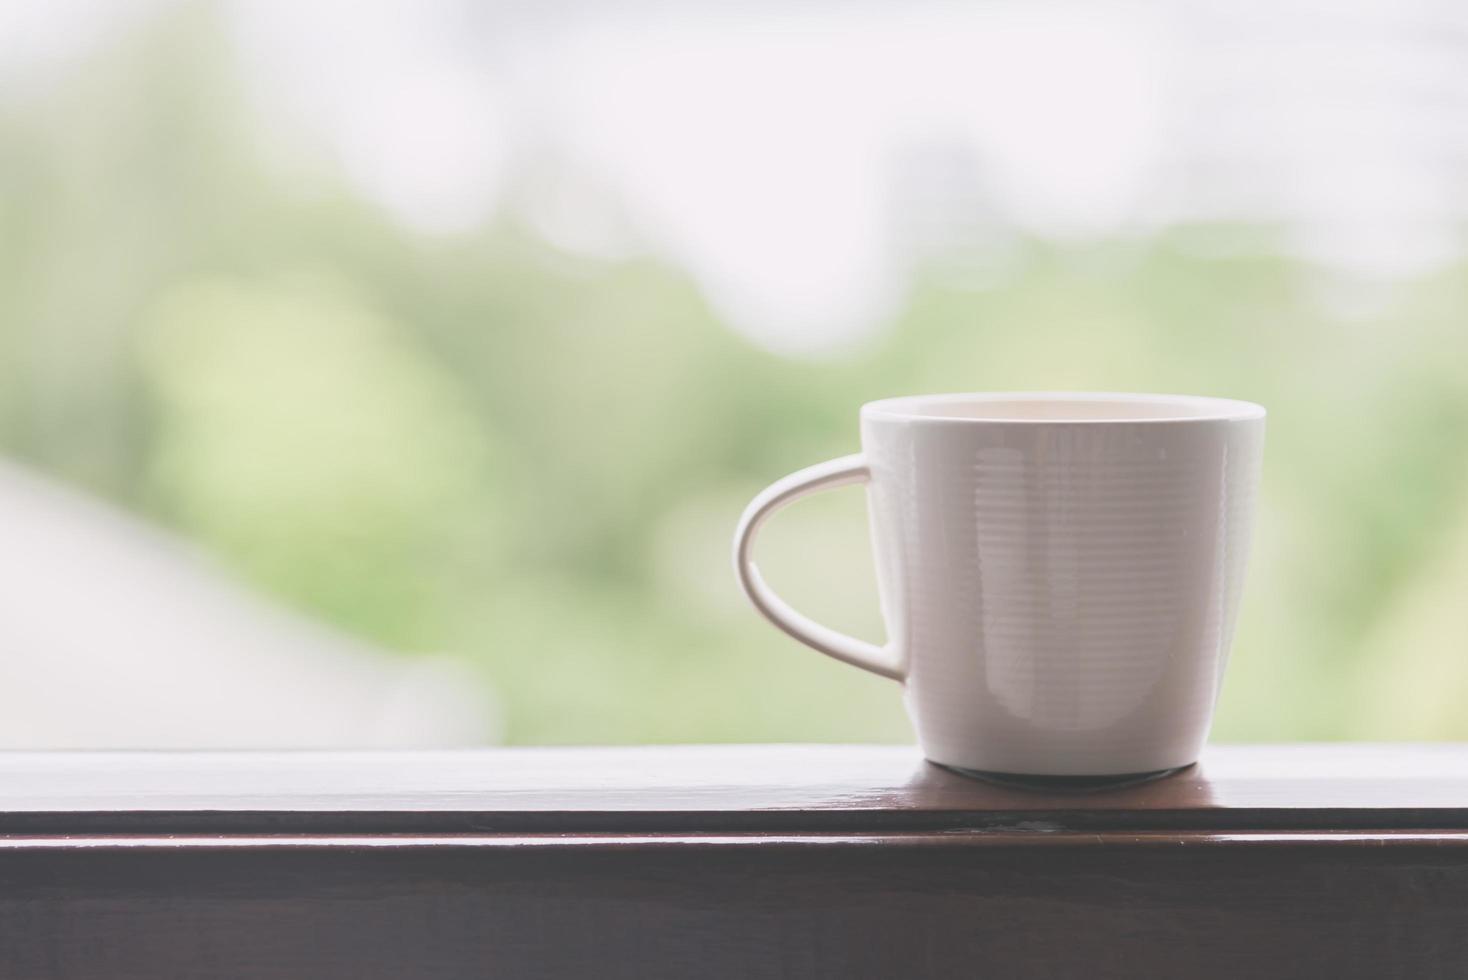 vit kaffekopp med utomhusvy - vintage filtereffekt foto